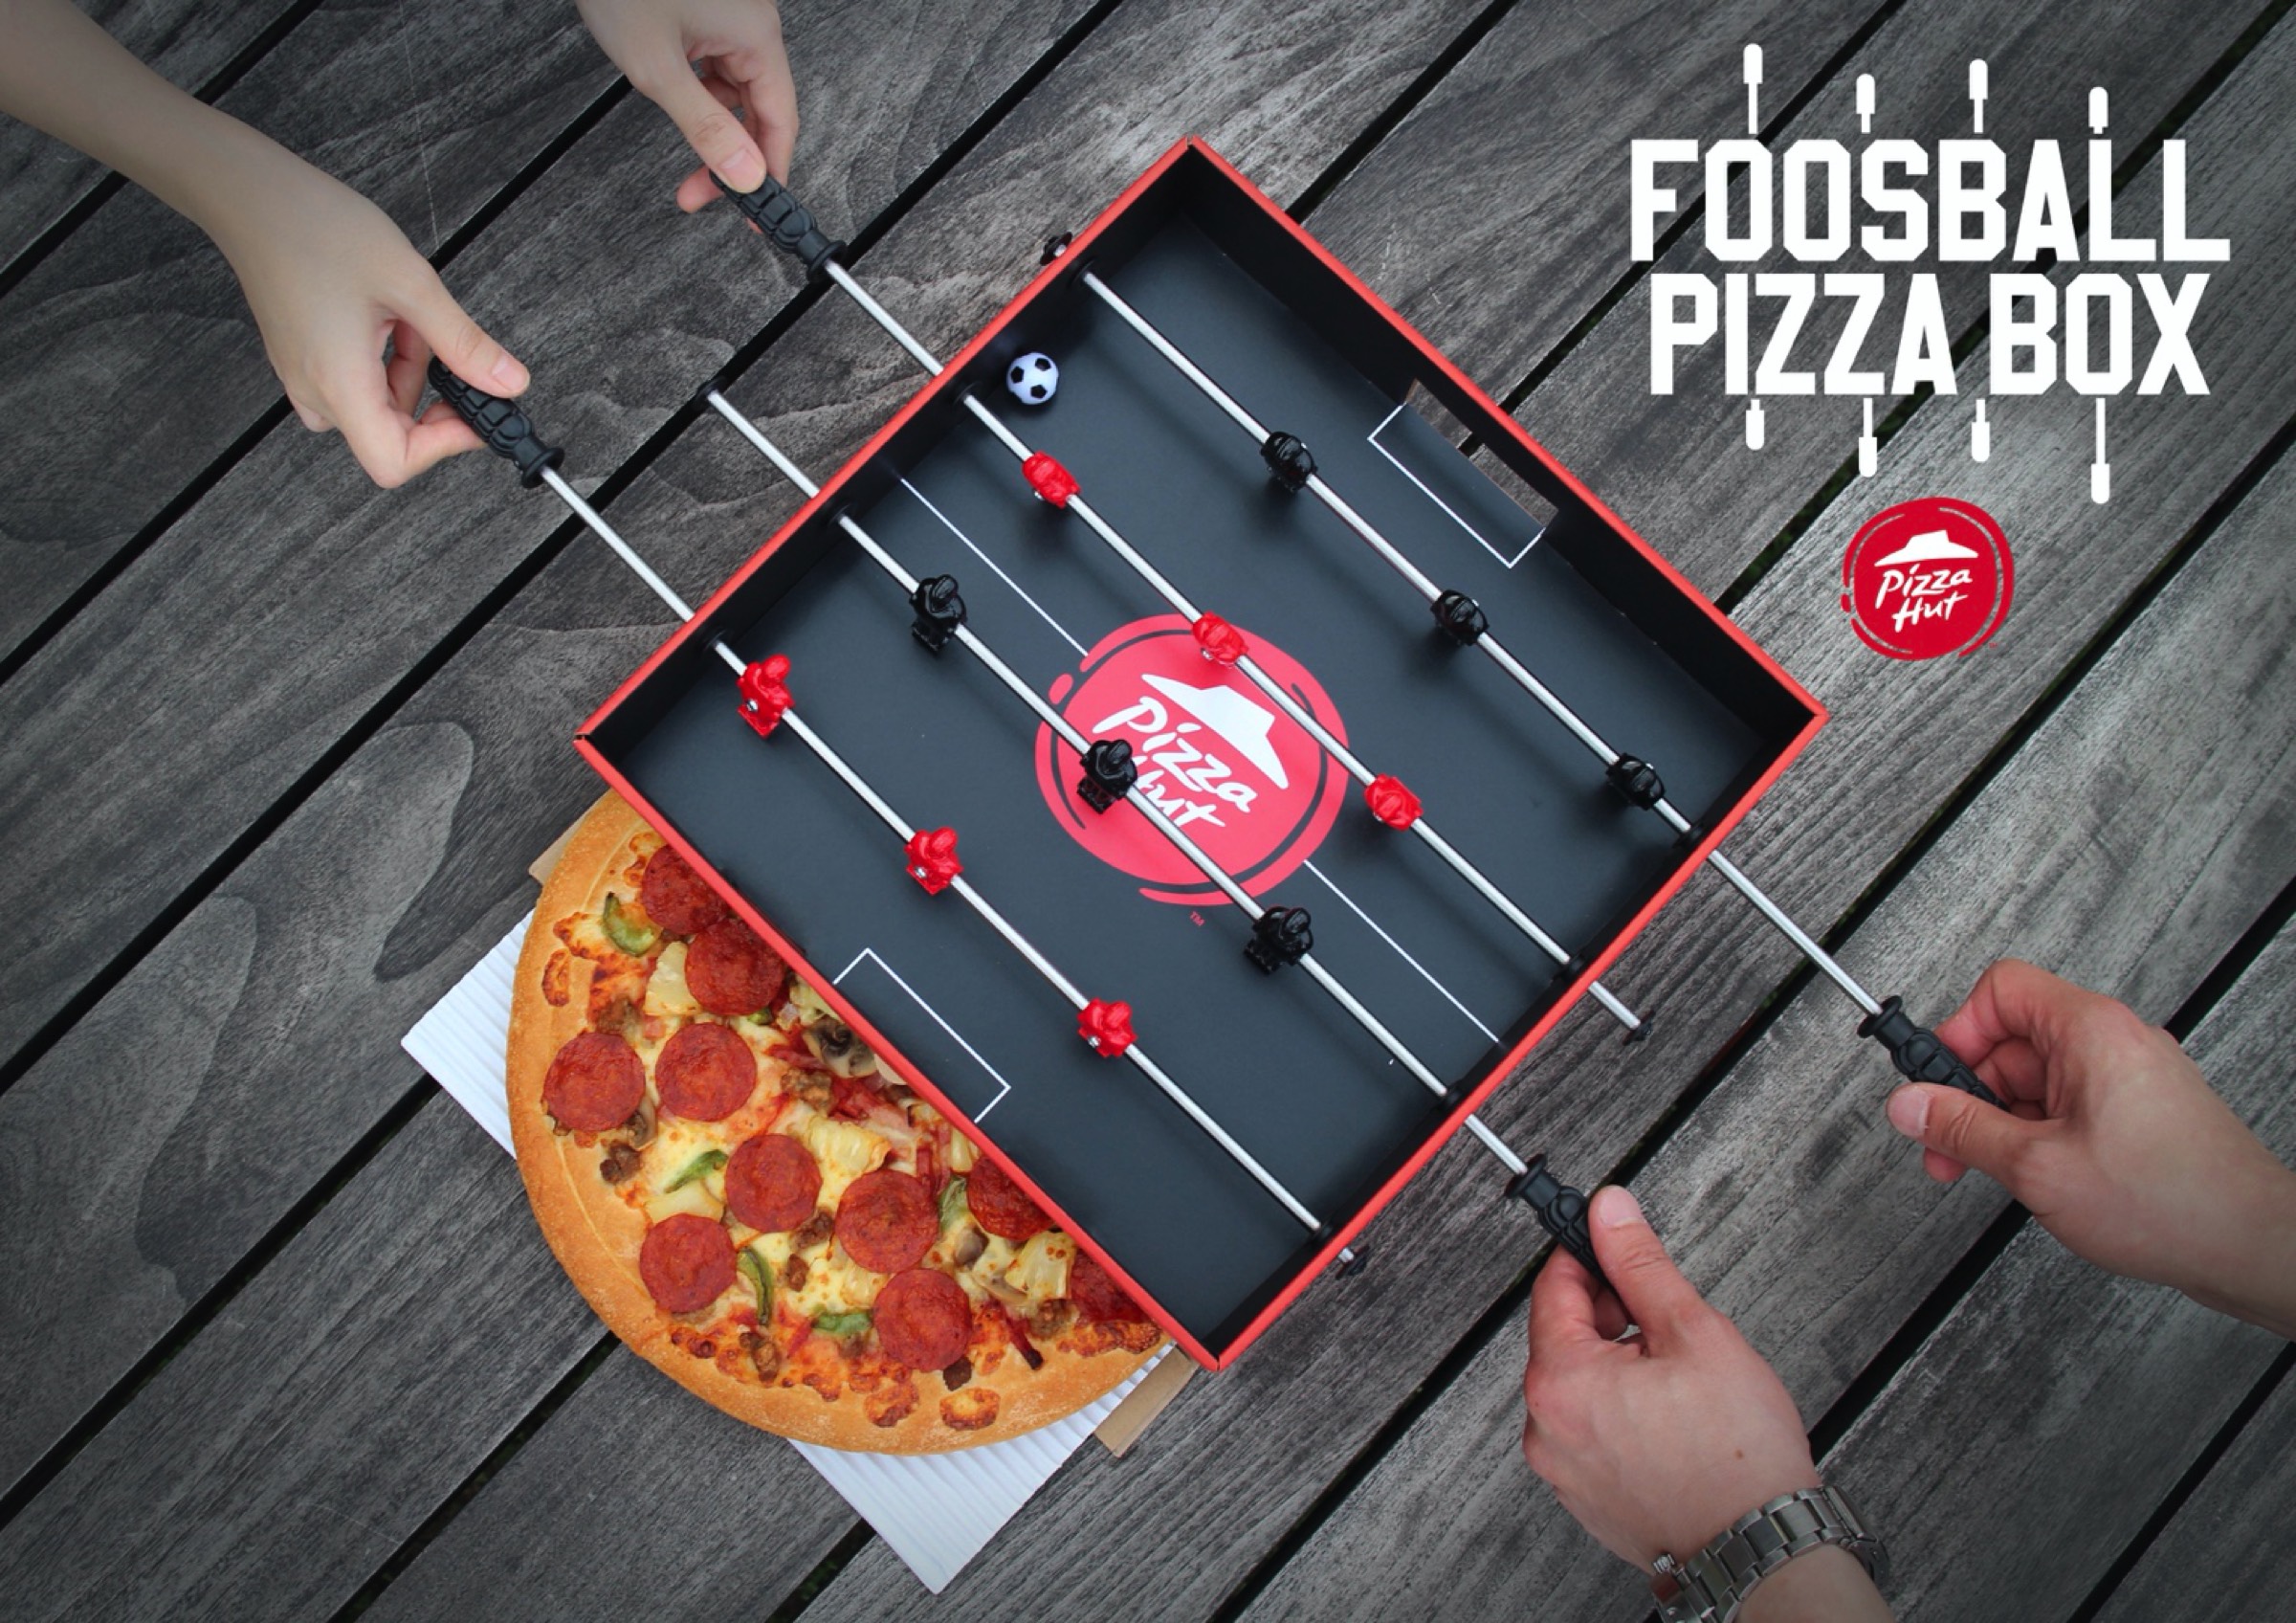 Pizza Hut: Foosball Pizza Box • Ads of the World™